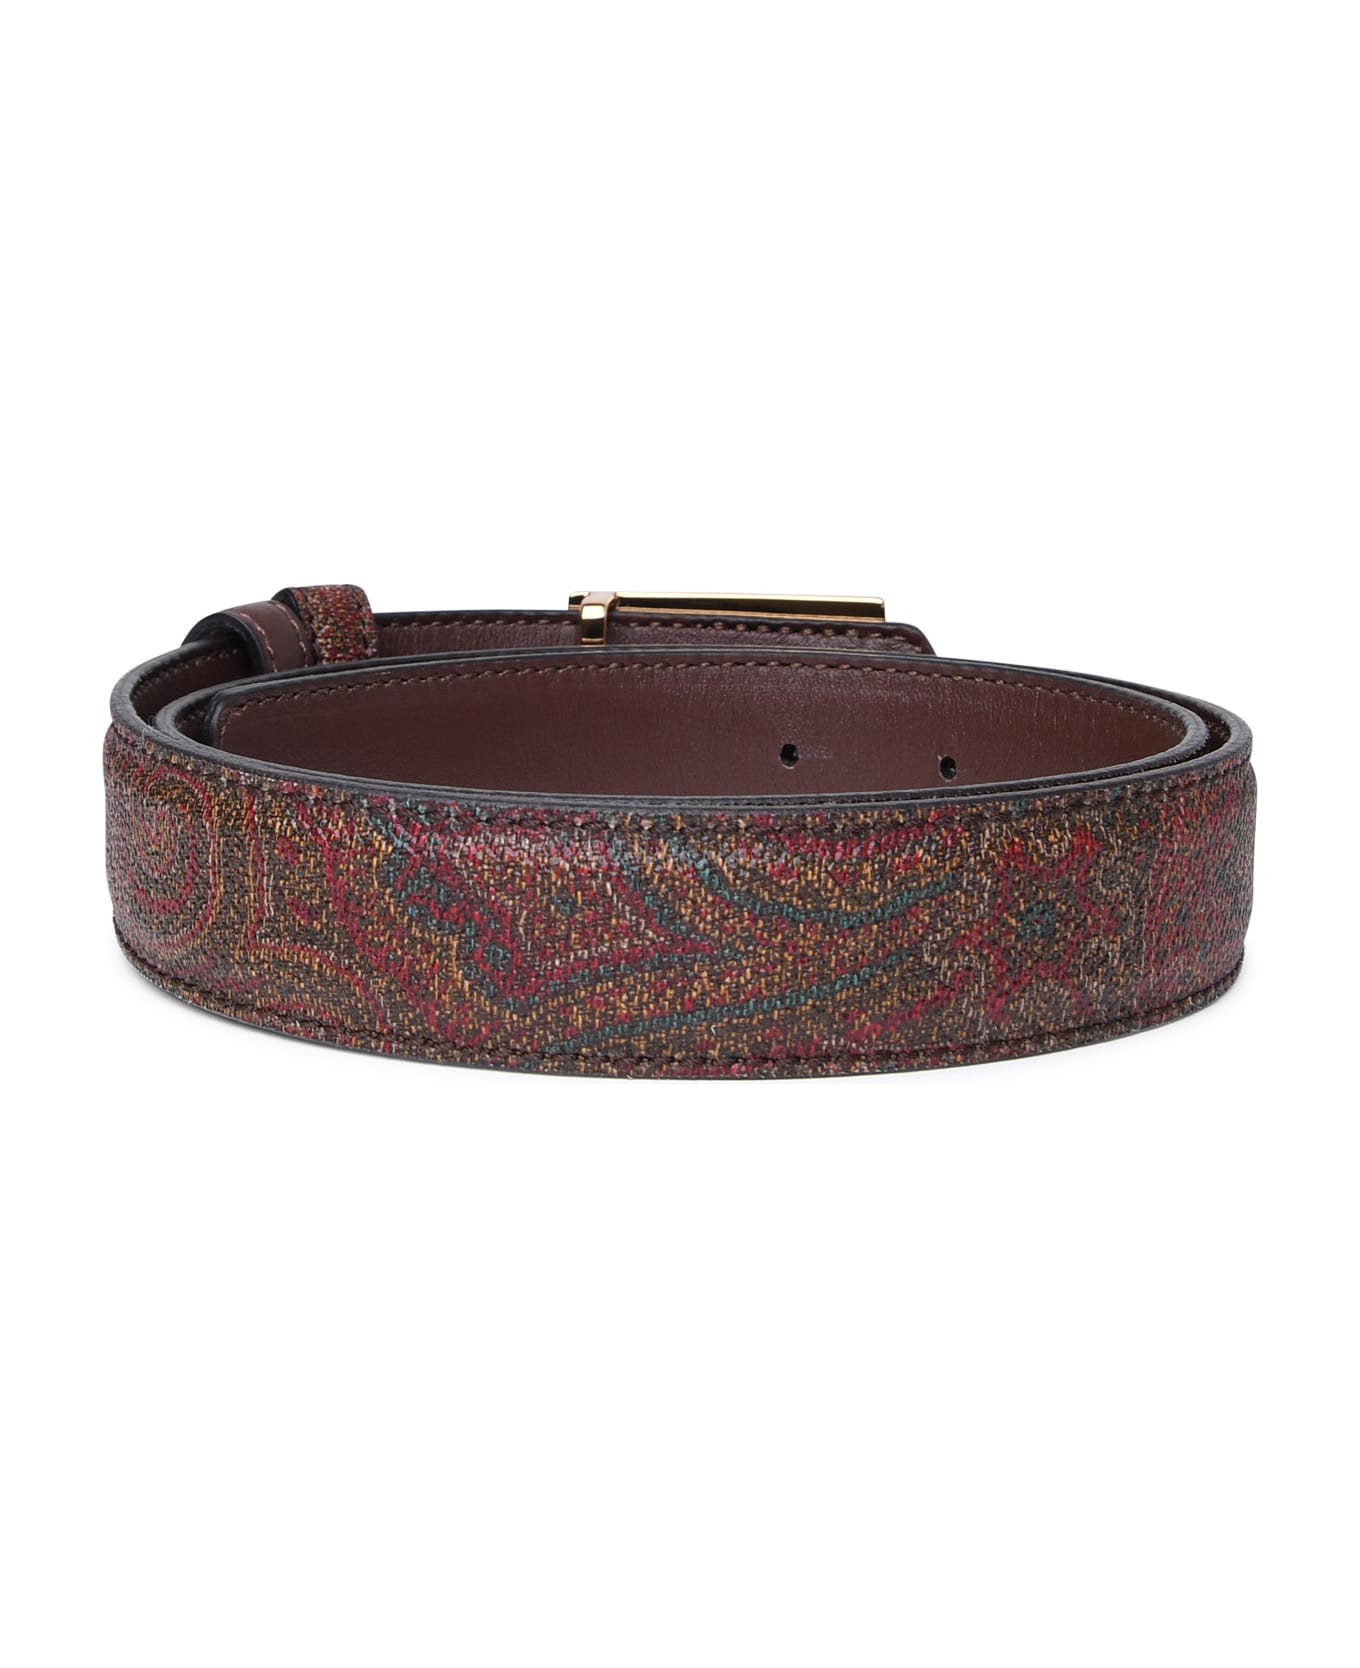 Etro Brown Leather Belt - Marrone ベルト